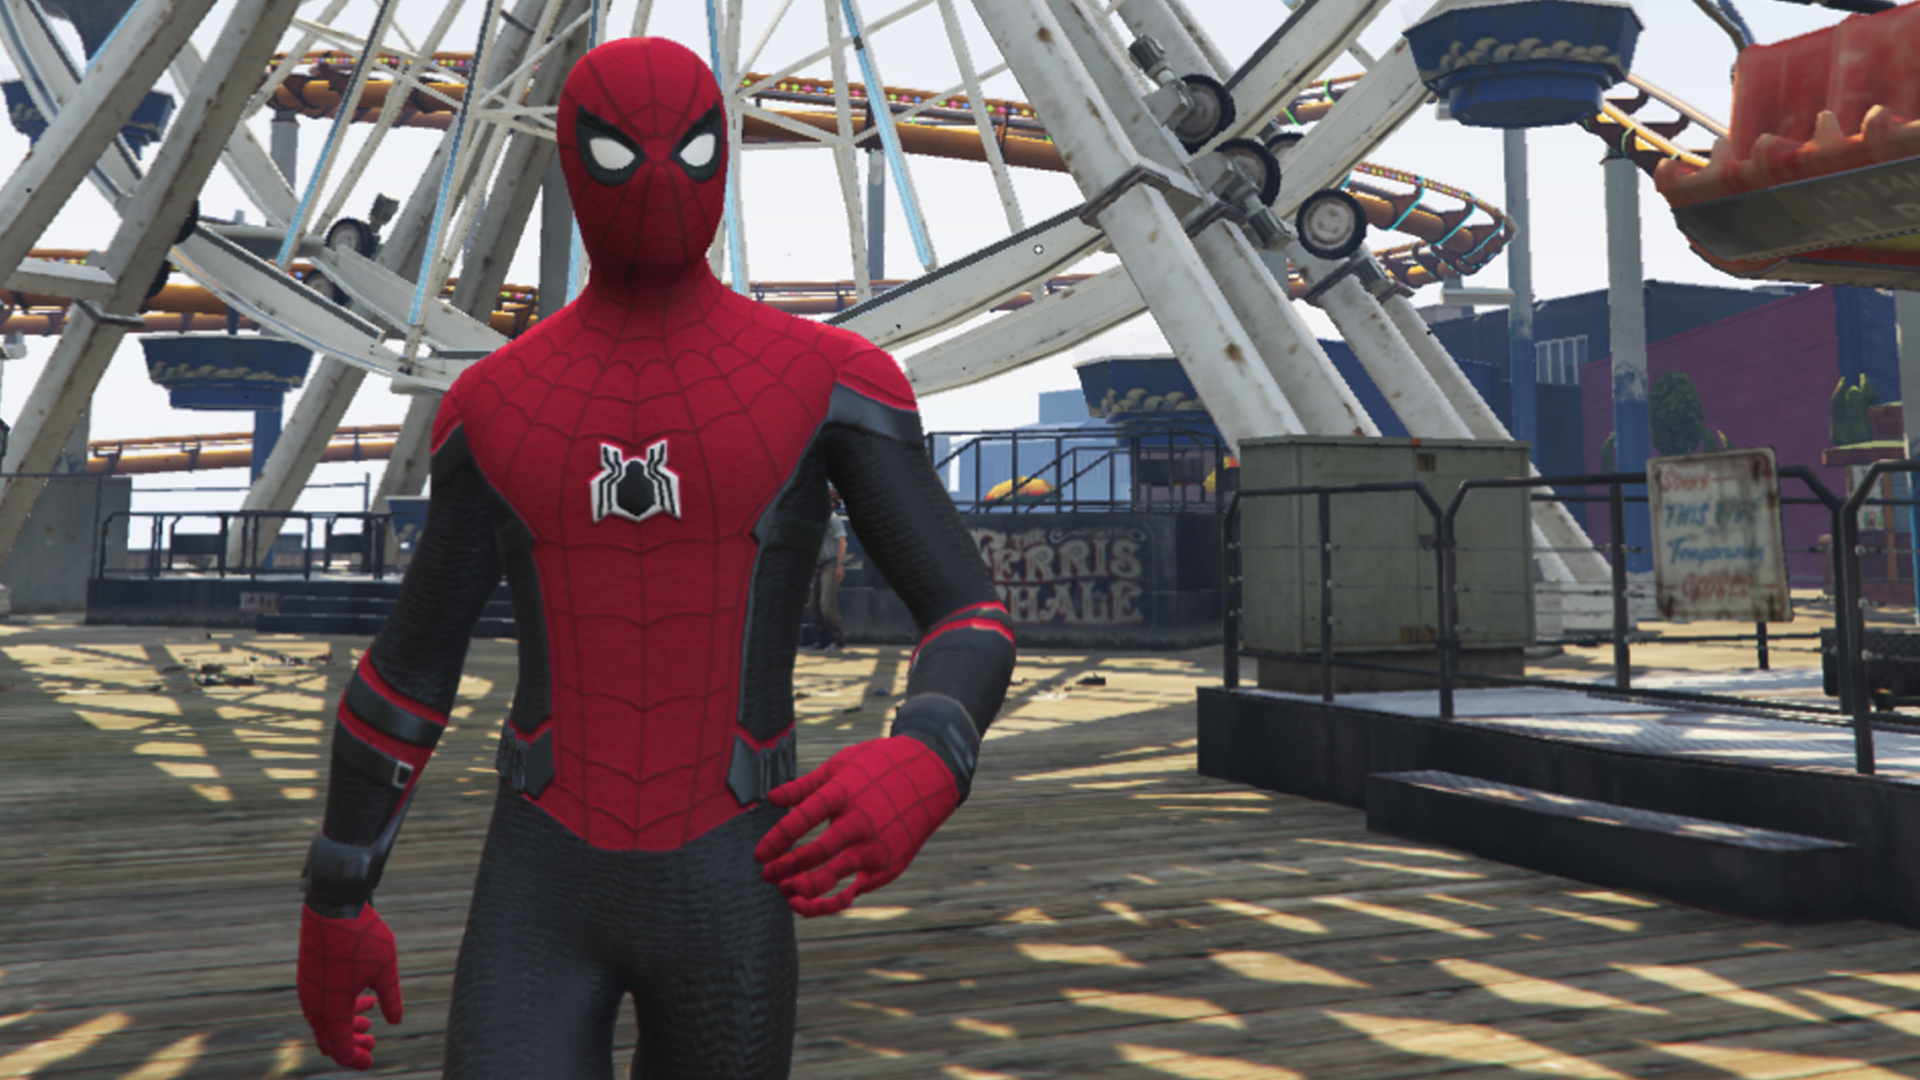 best suit mods spiderman